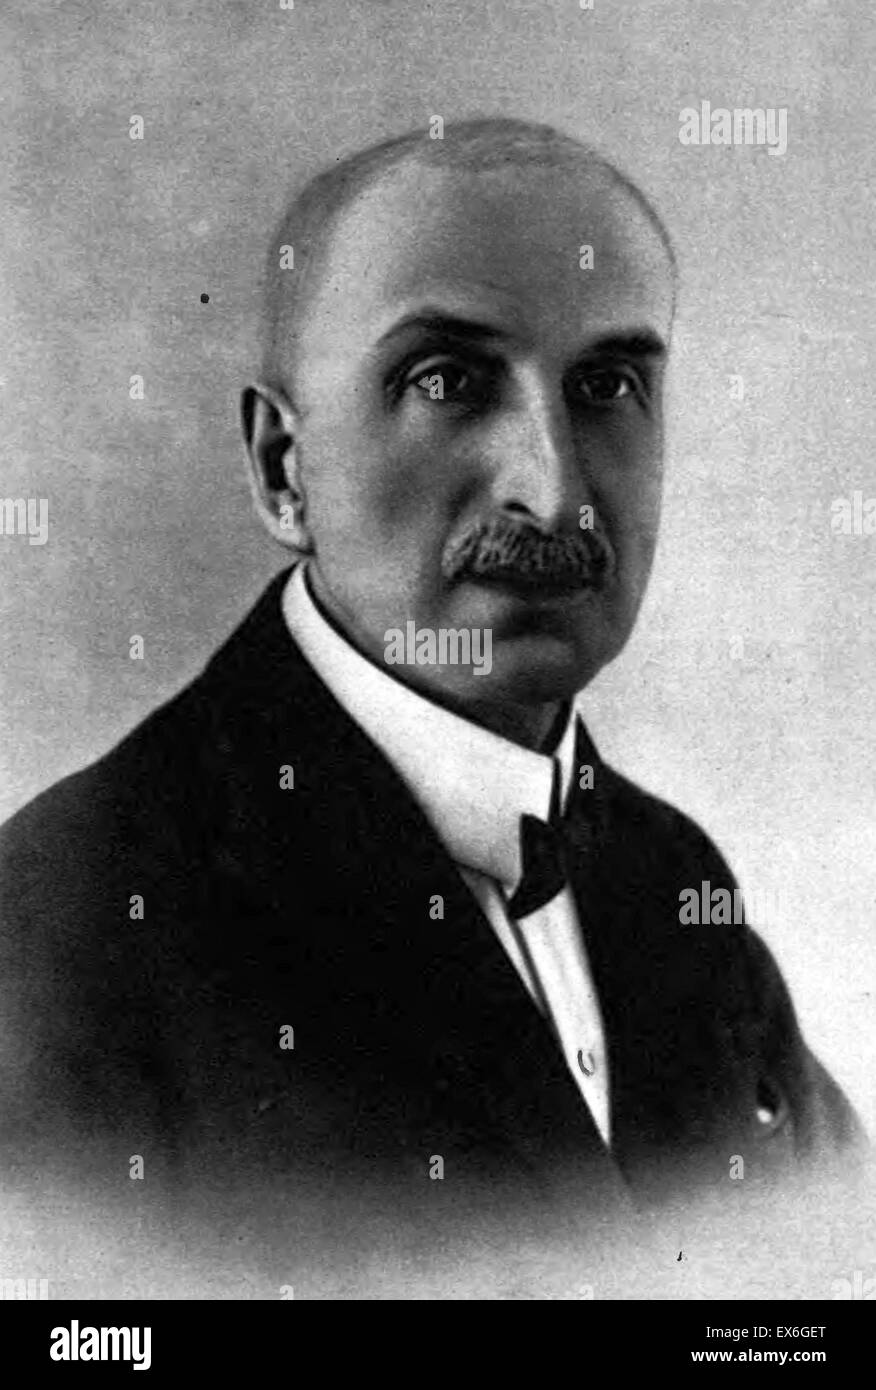 Szymon Ashkenazy (December 24, 1865, Zawichost - June 22, 1935, Warsaw) was a Polish historian, educator, statesman and diplomat, founder of the Ashkenazy school. Stock Photo